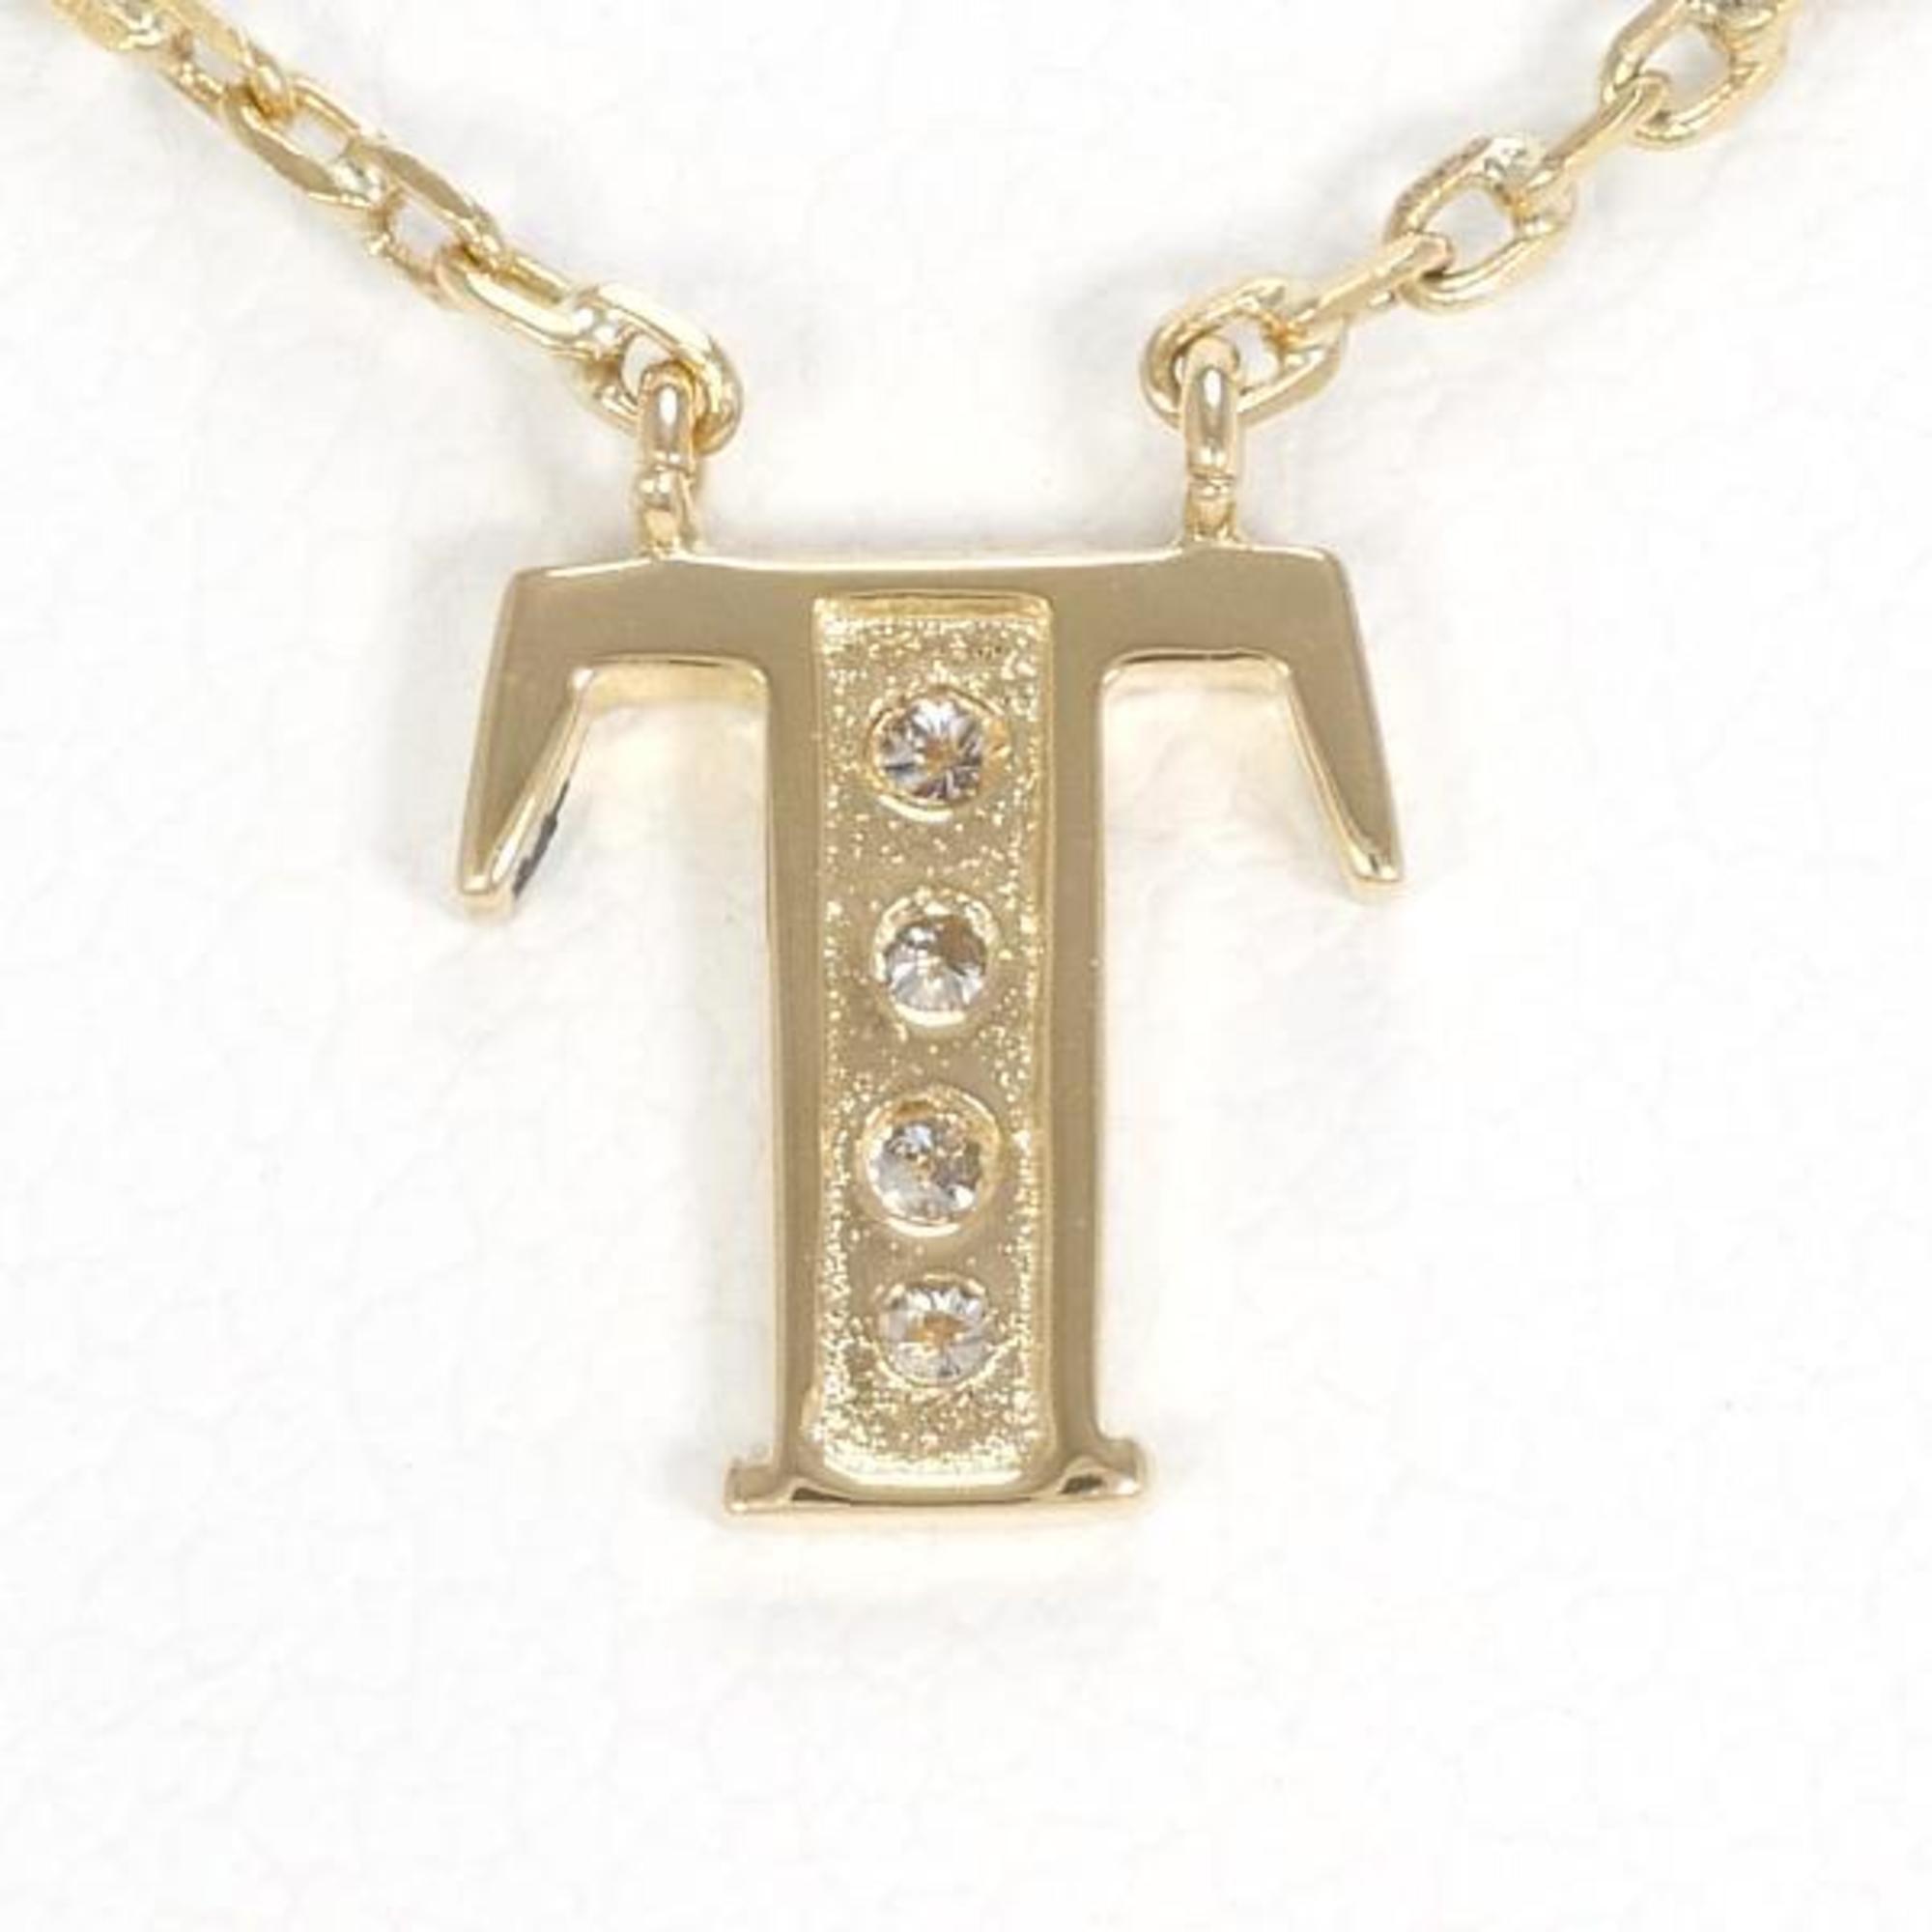 Seiko Jewelry K18YG Necklace Diamond Total Weight Approx. 2.3g 39cm